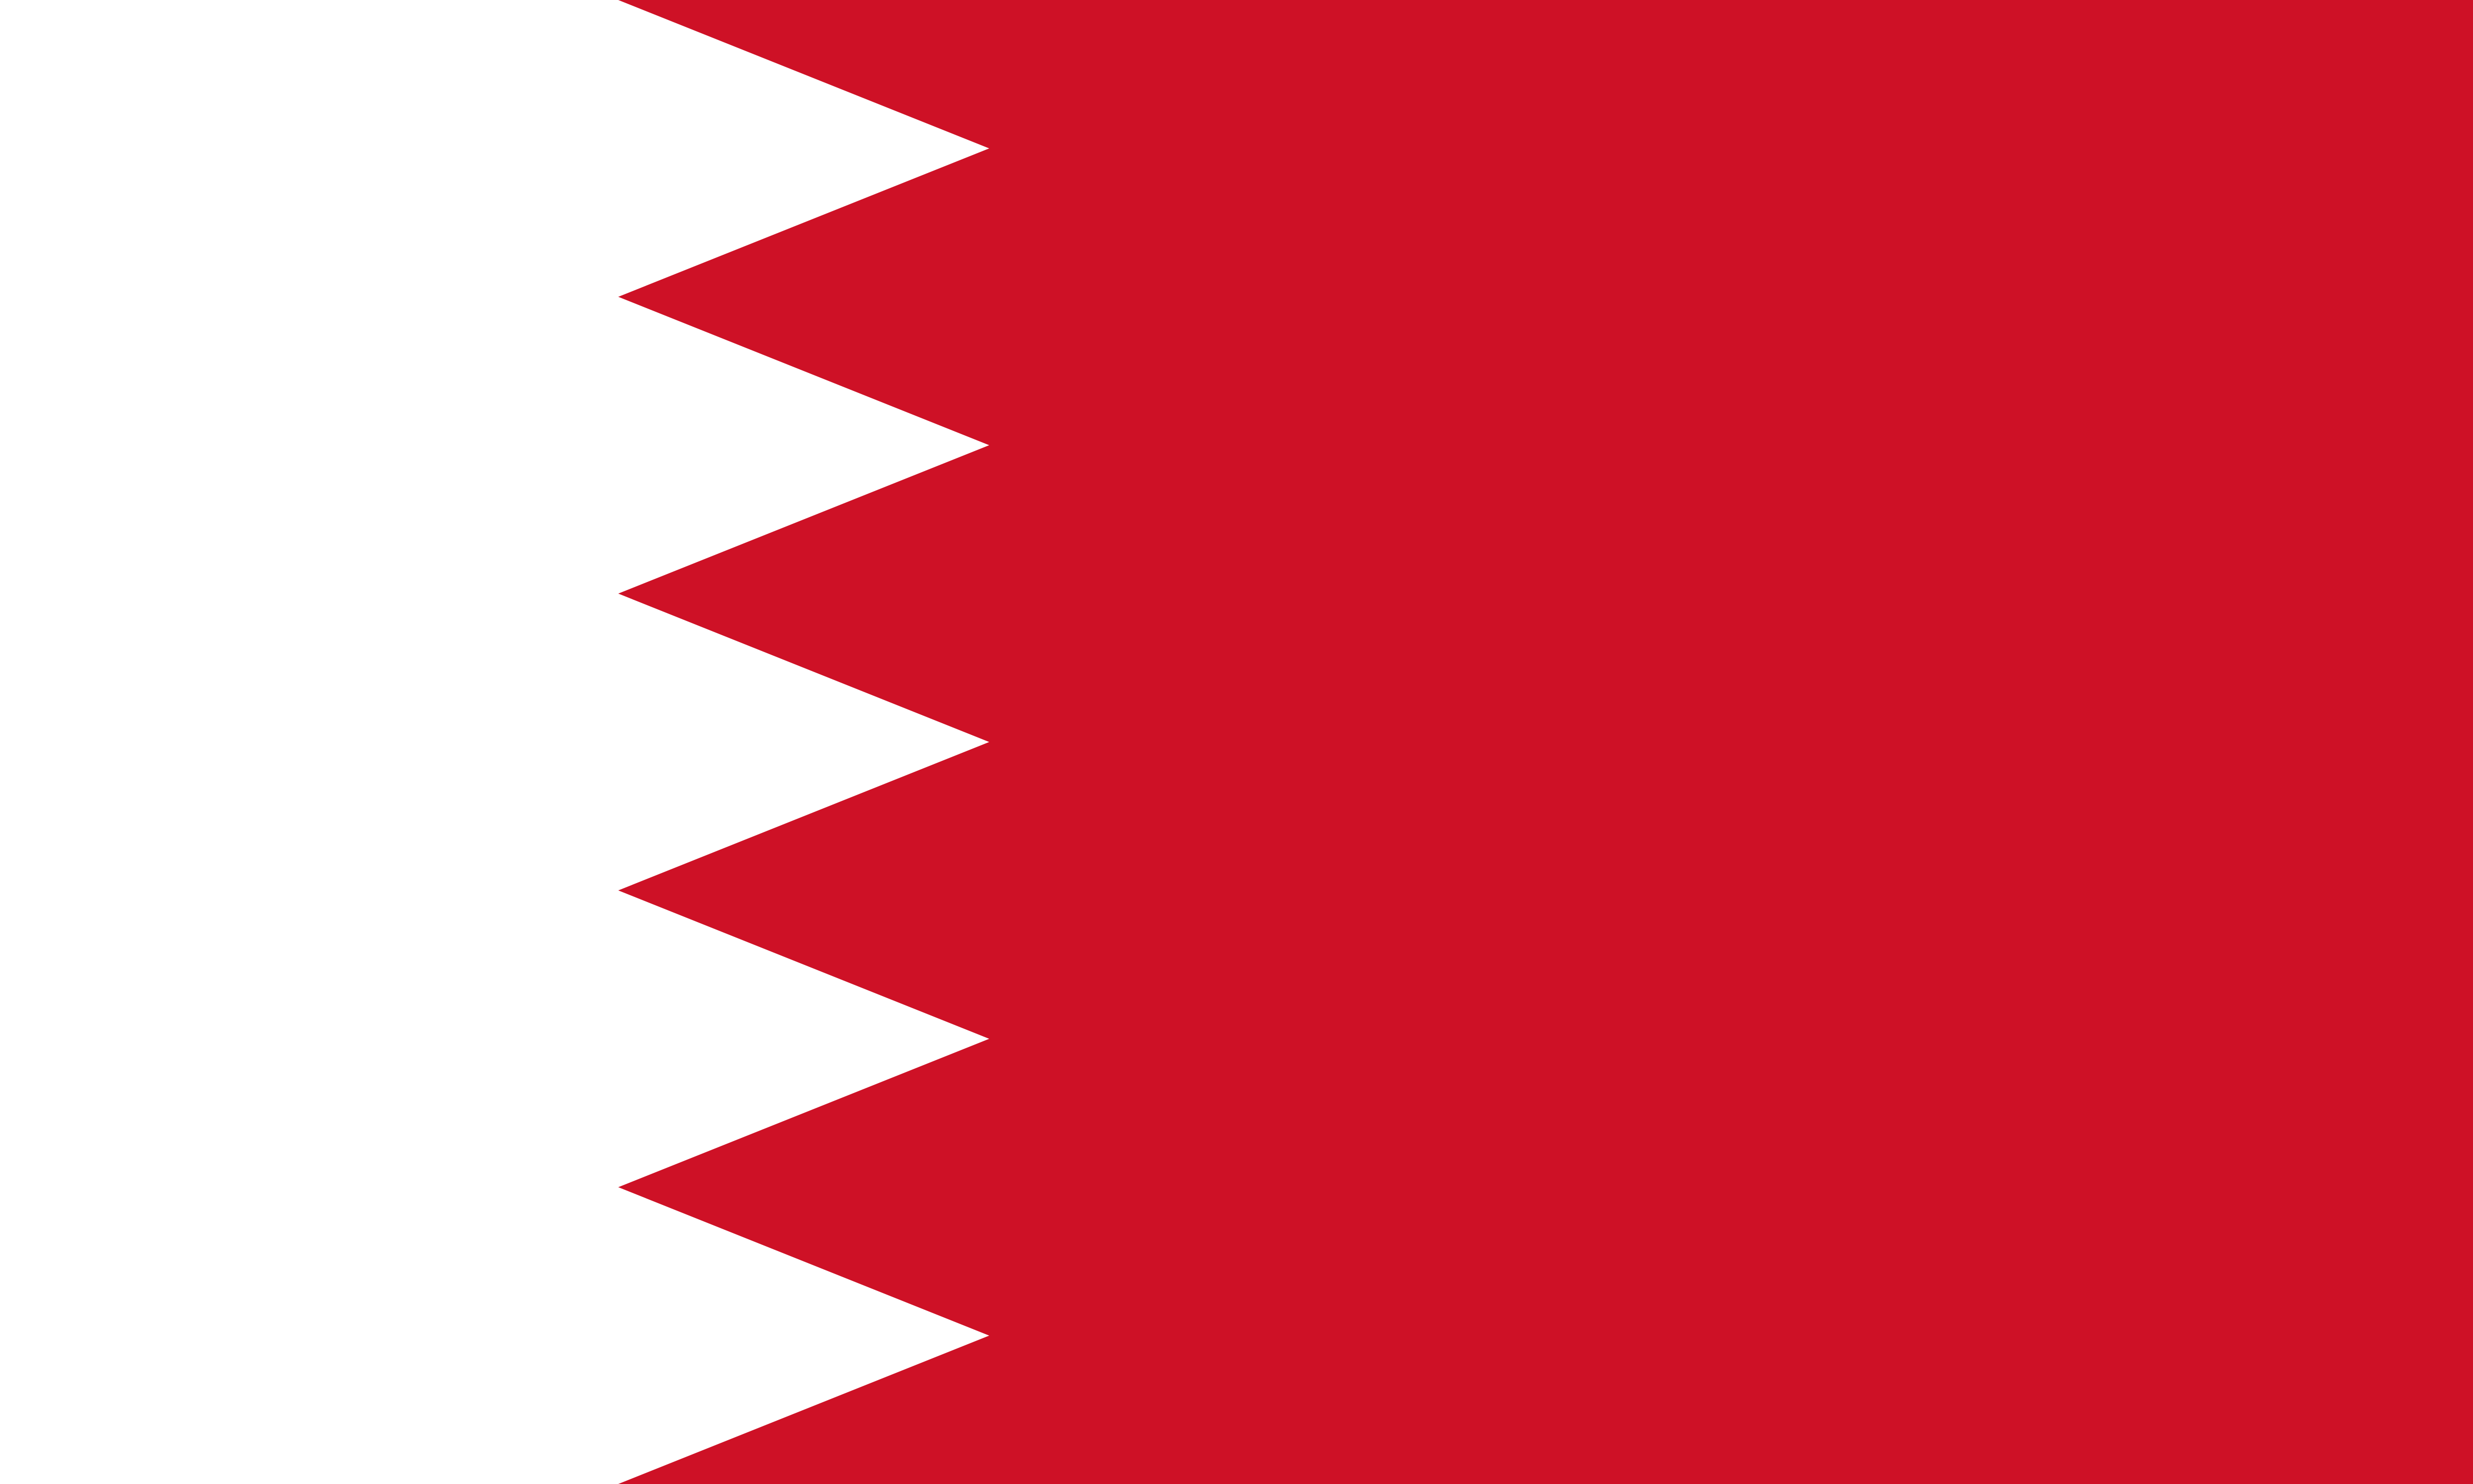 Bahrain Flag Vector - Free Download